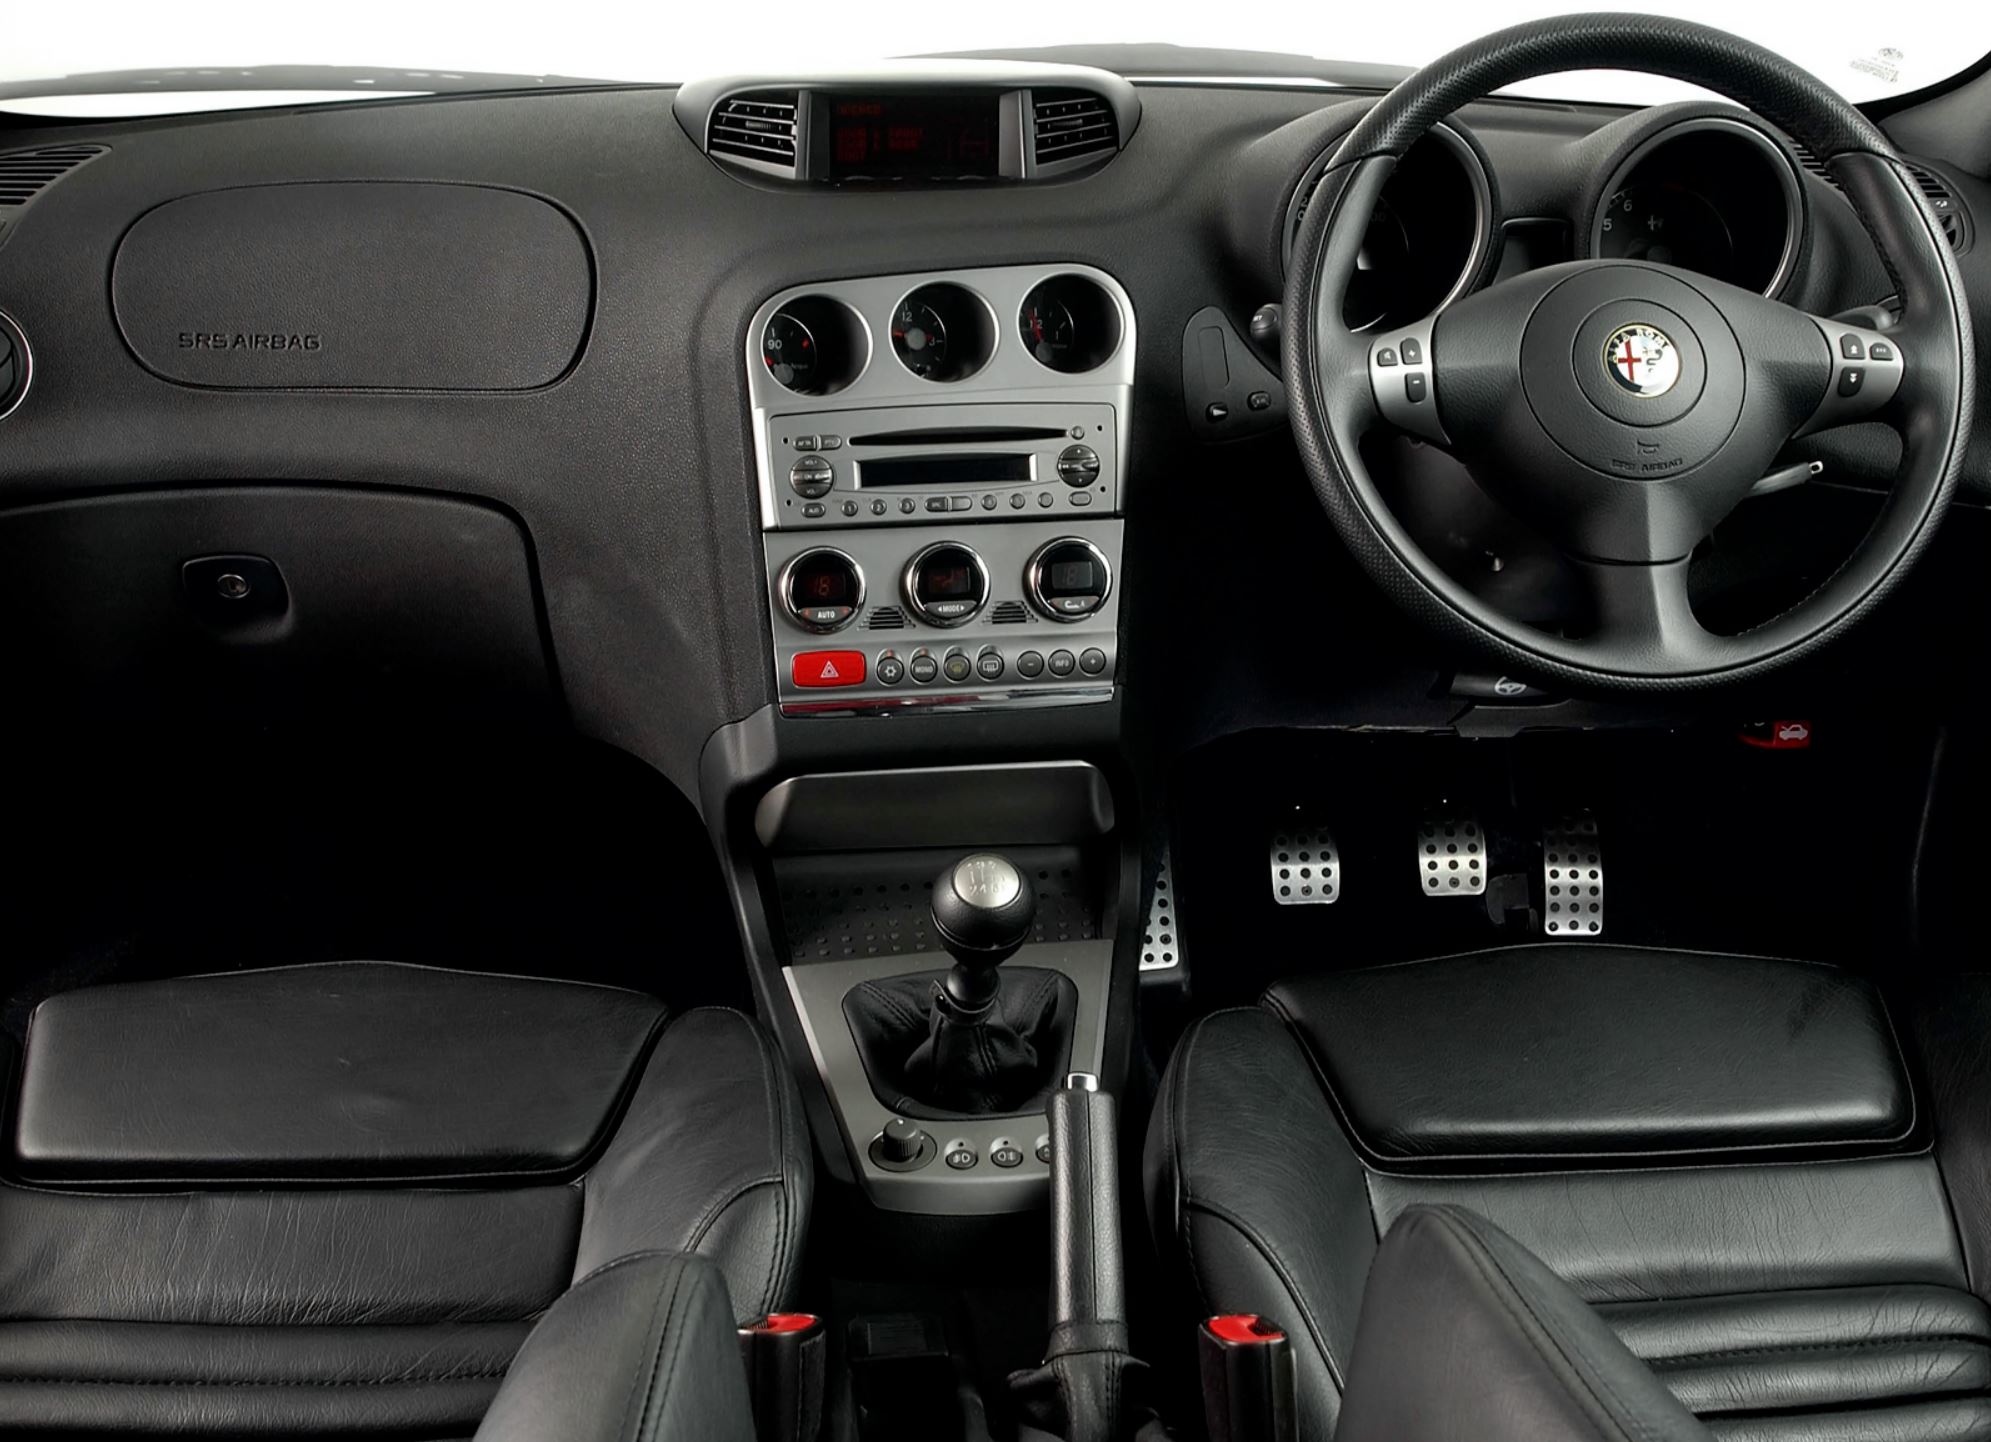 Alfa Romeo 156 GTA interior with six speed manual